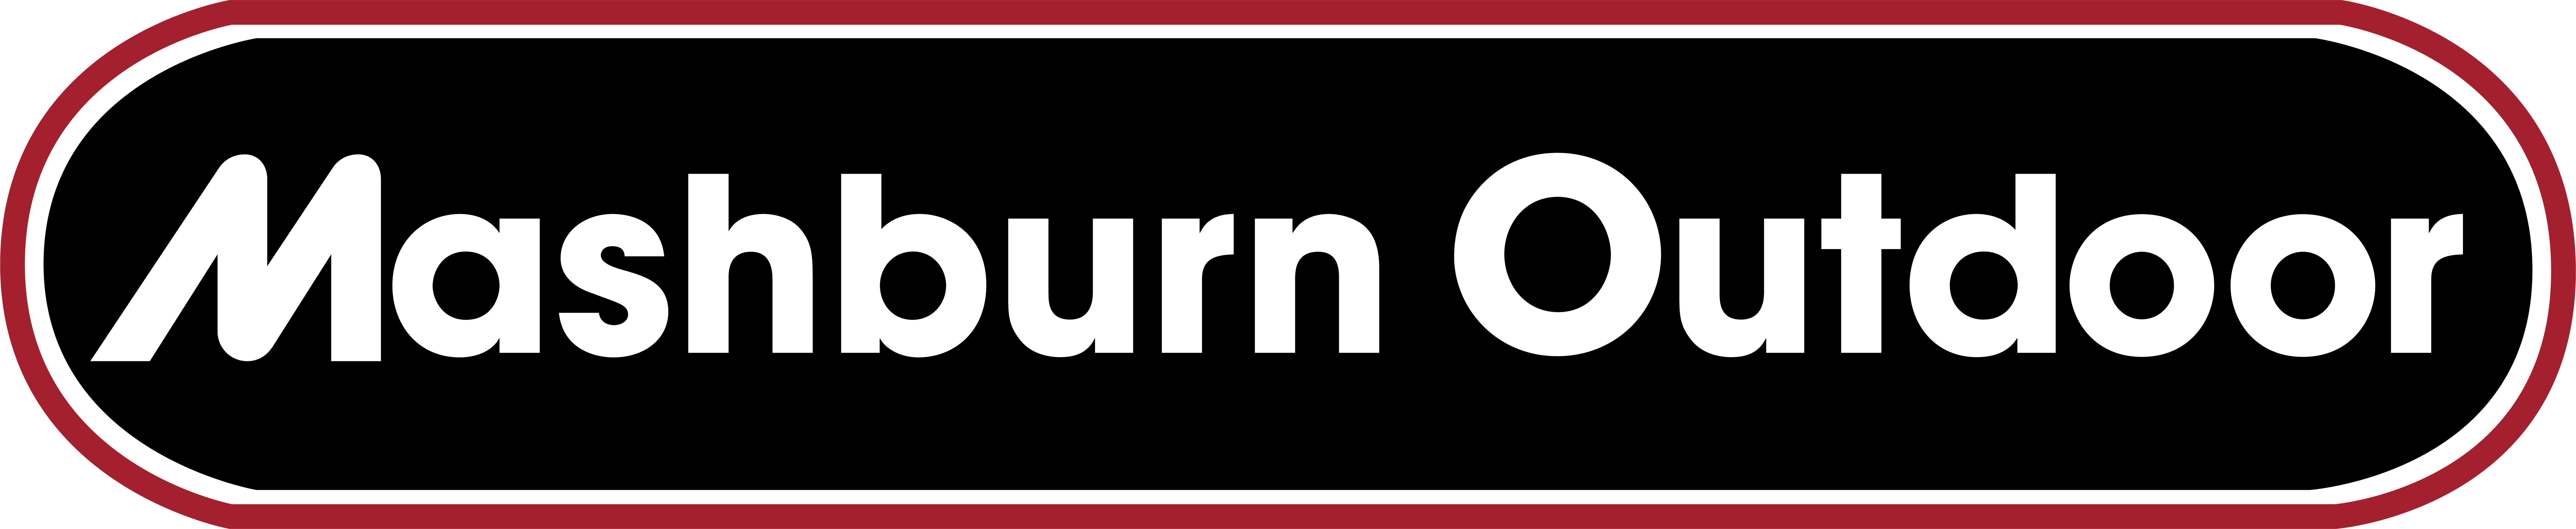 Mashburn Outdoor Logo